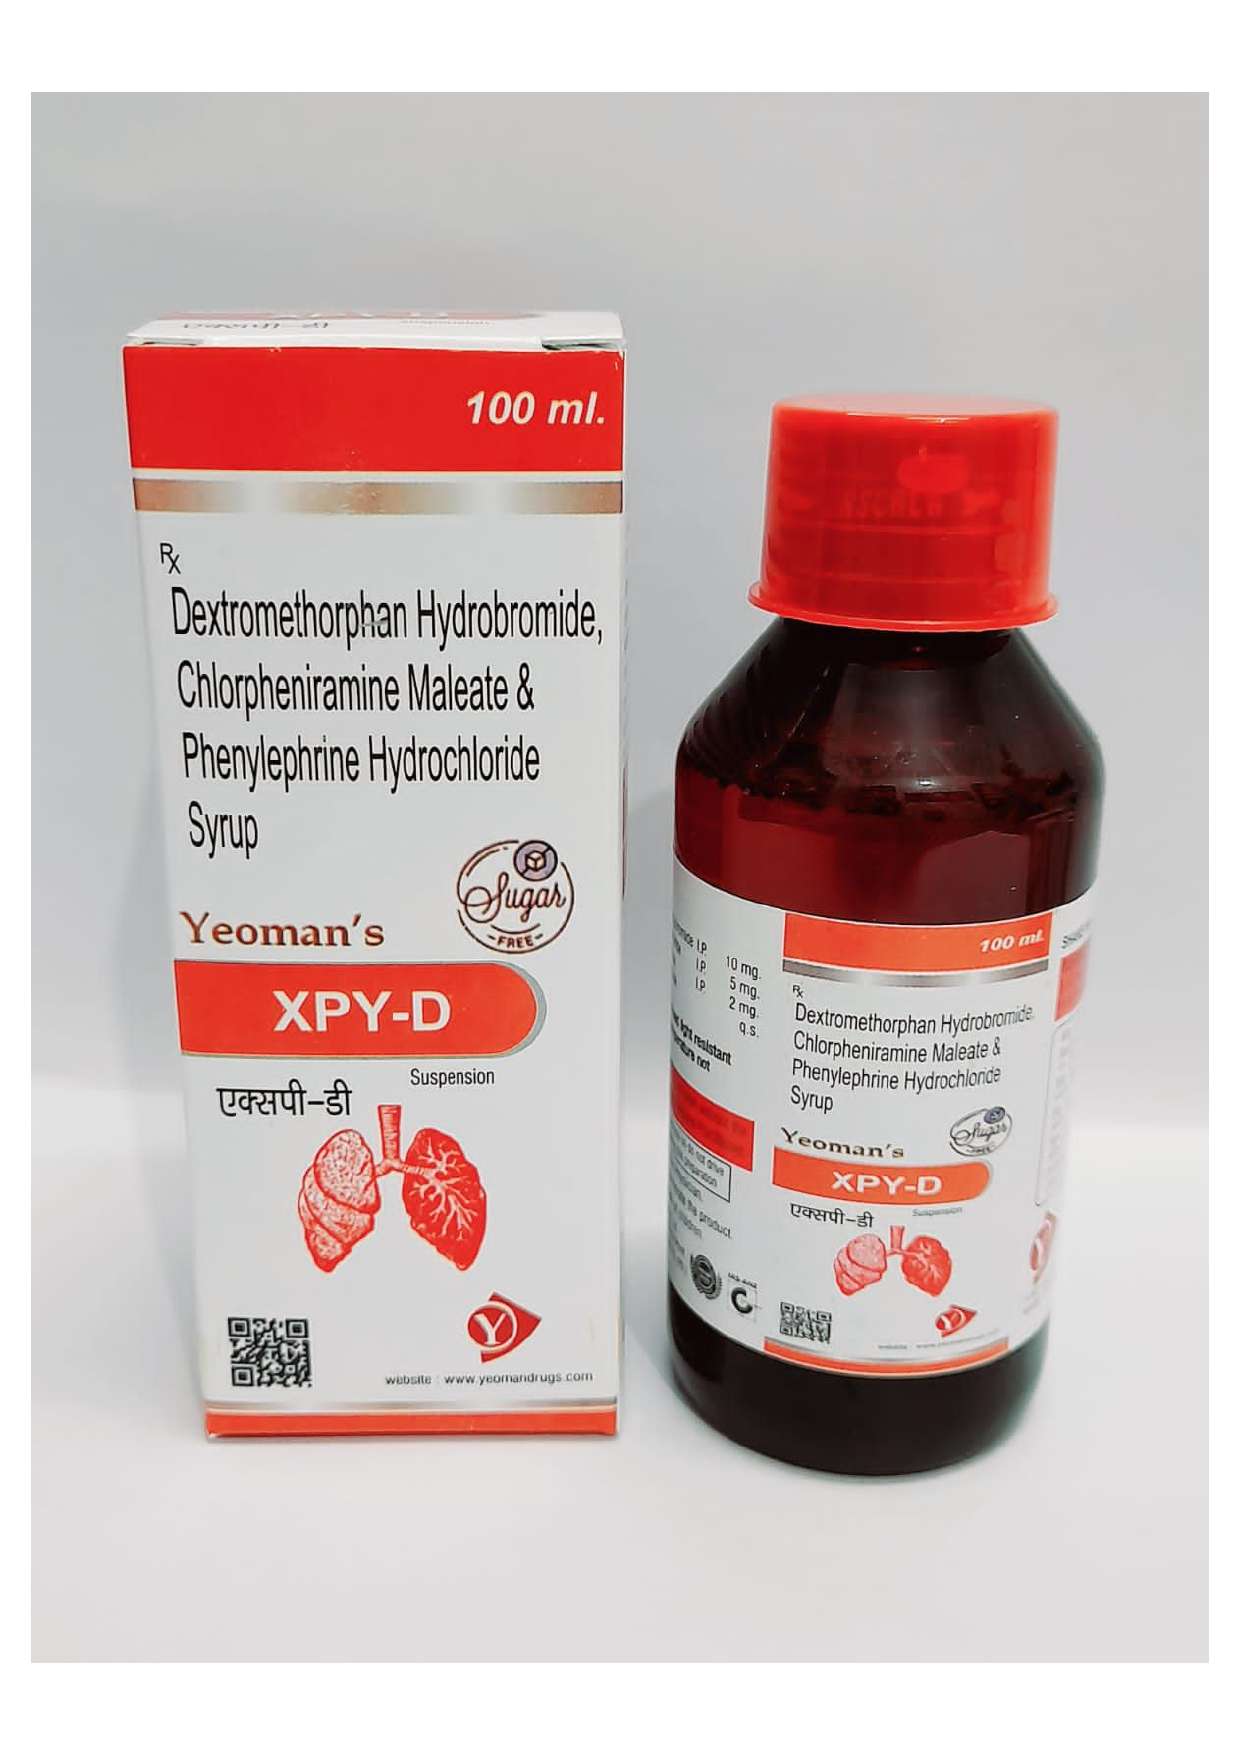 dextrometharphan 10mg + phenylephrine 5mg. +  cpm 2mg.